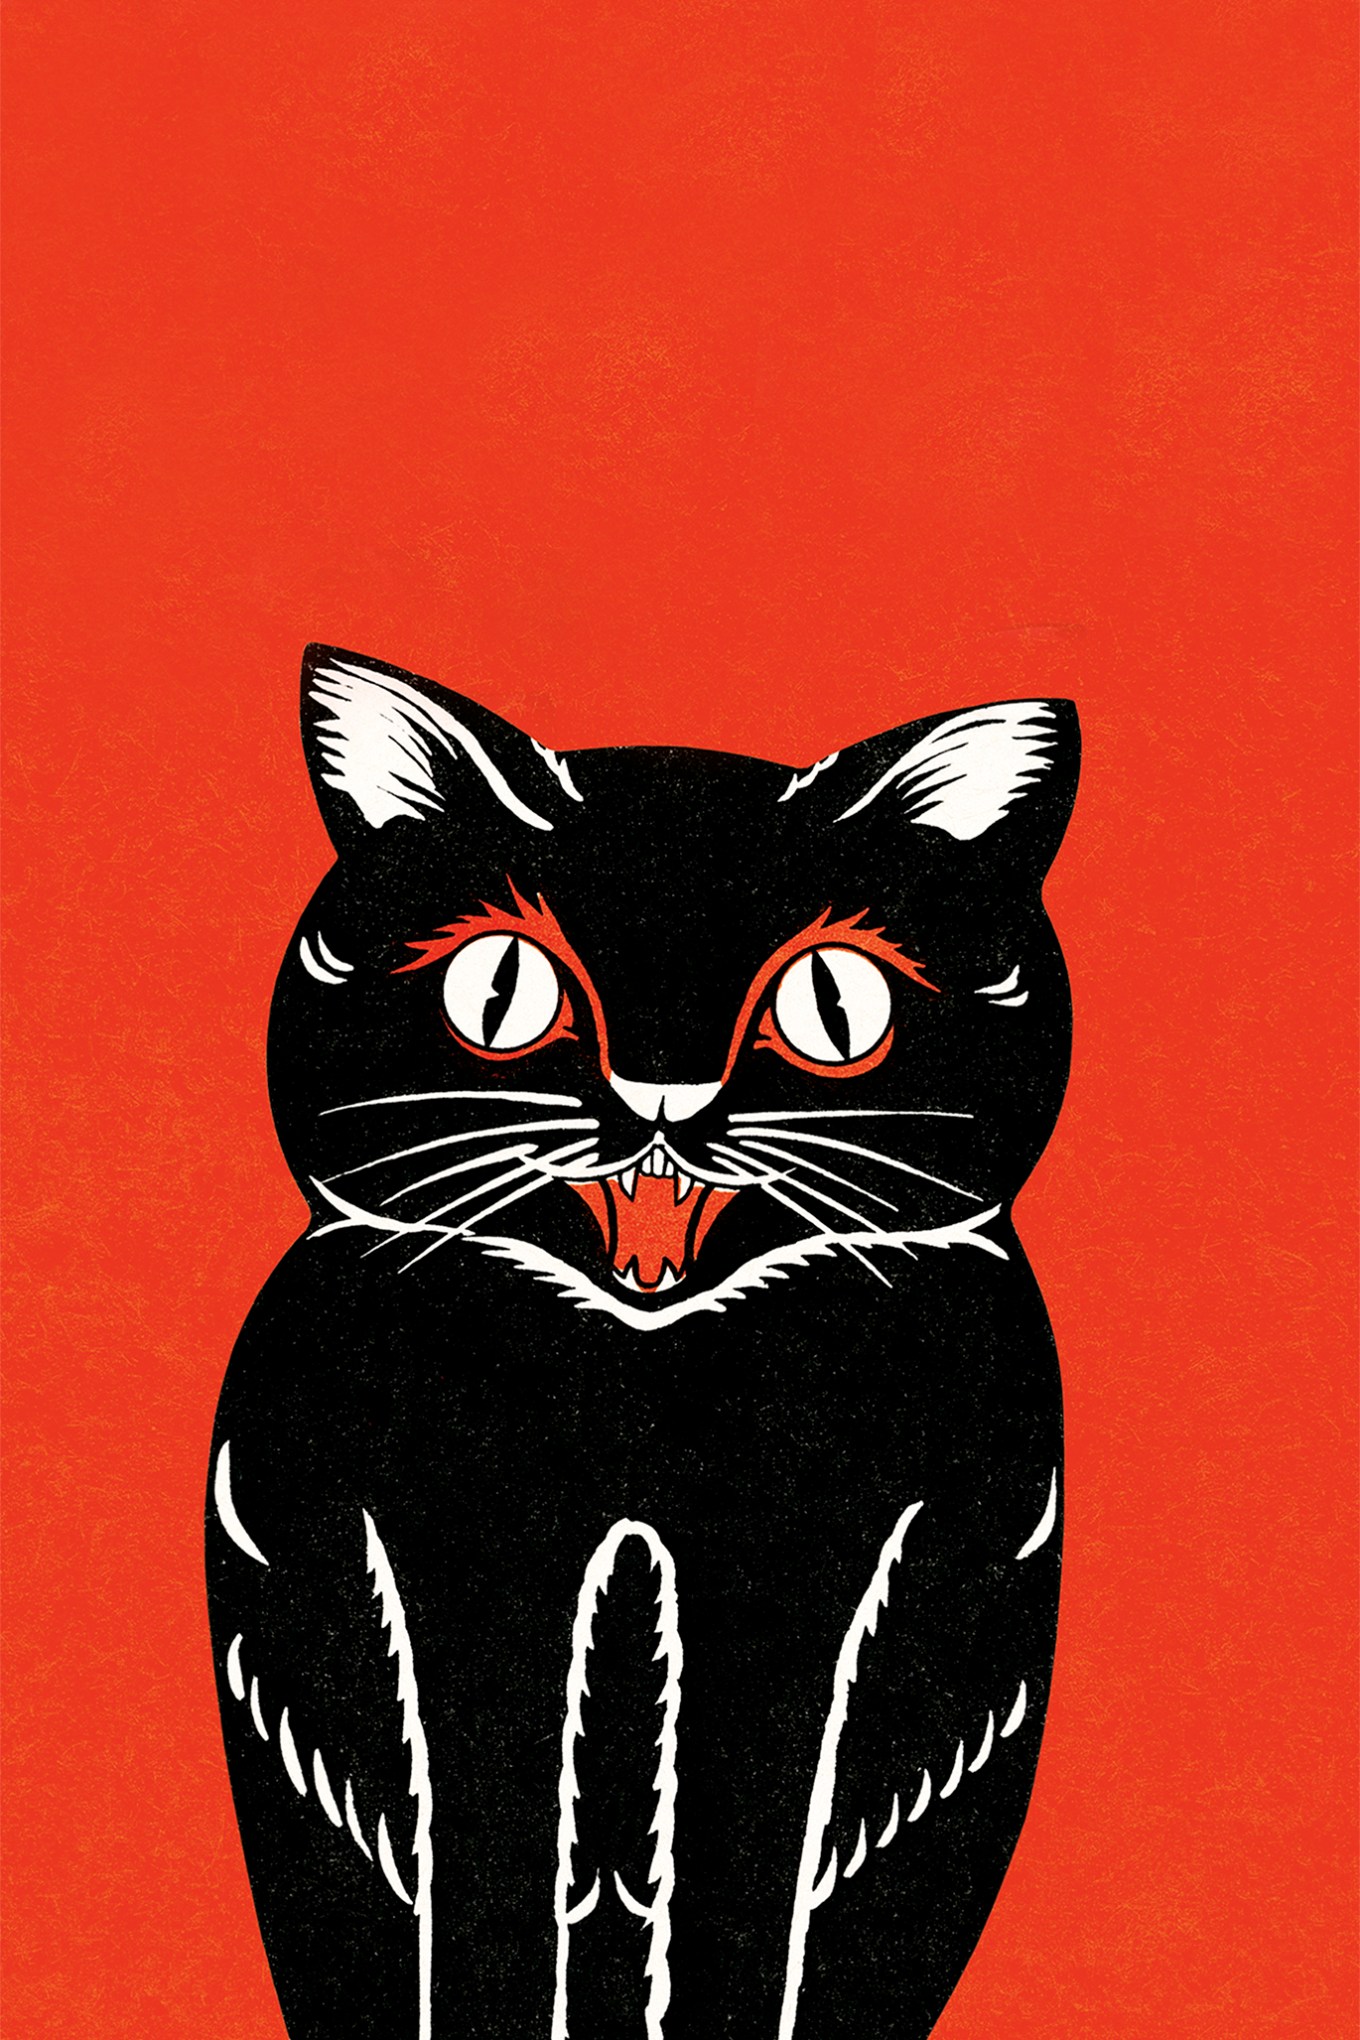 Retro illustration of black cat on orange-red background